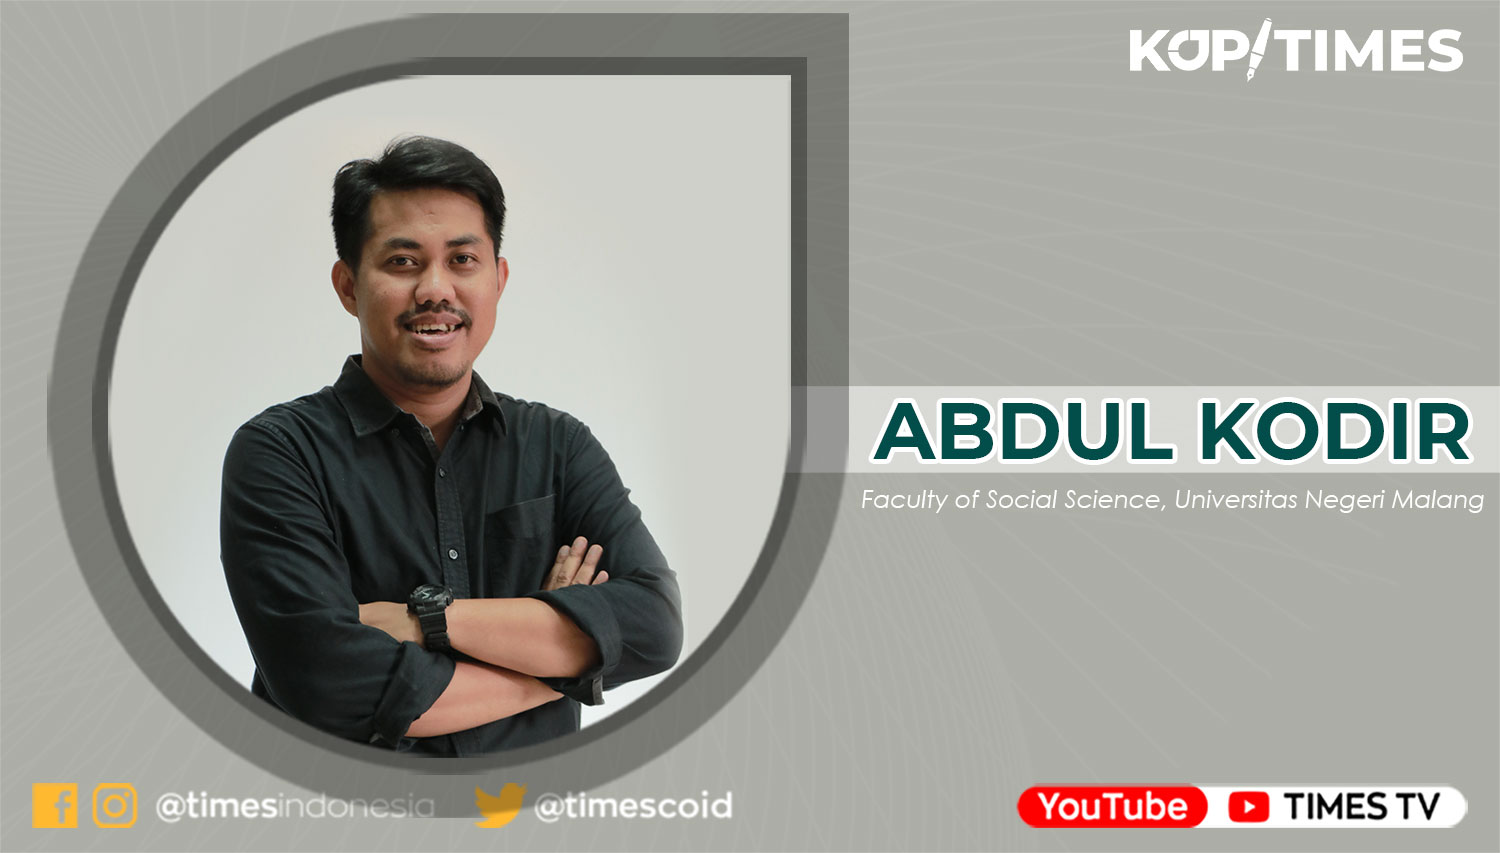 Abdul Kodir, Faculty of Social Science, Universitas Negeri Malang